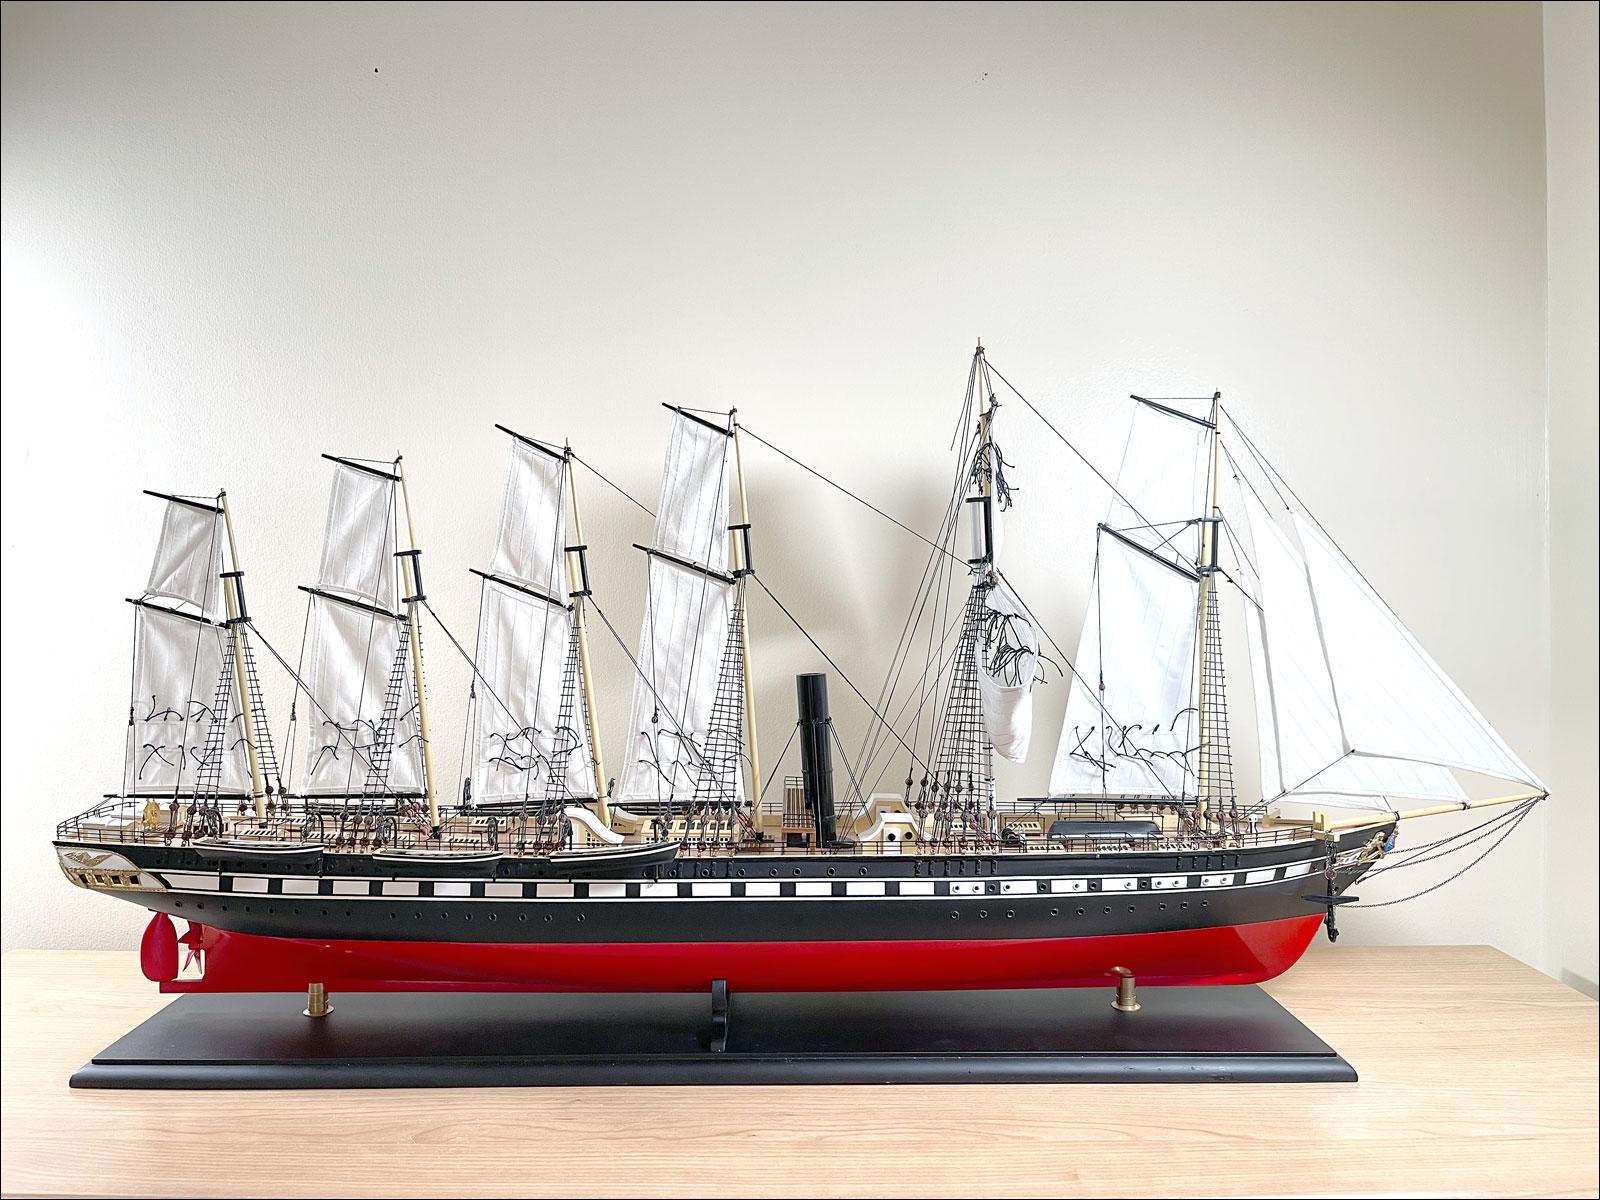 ss great britain ship model